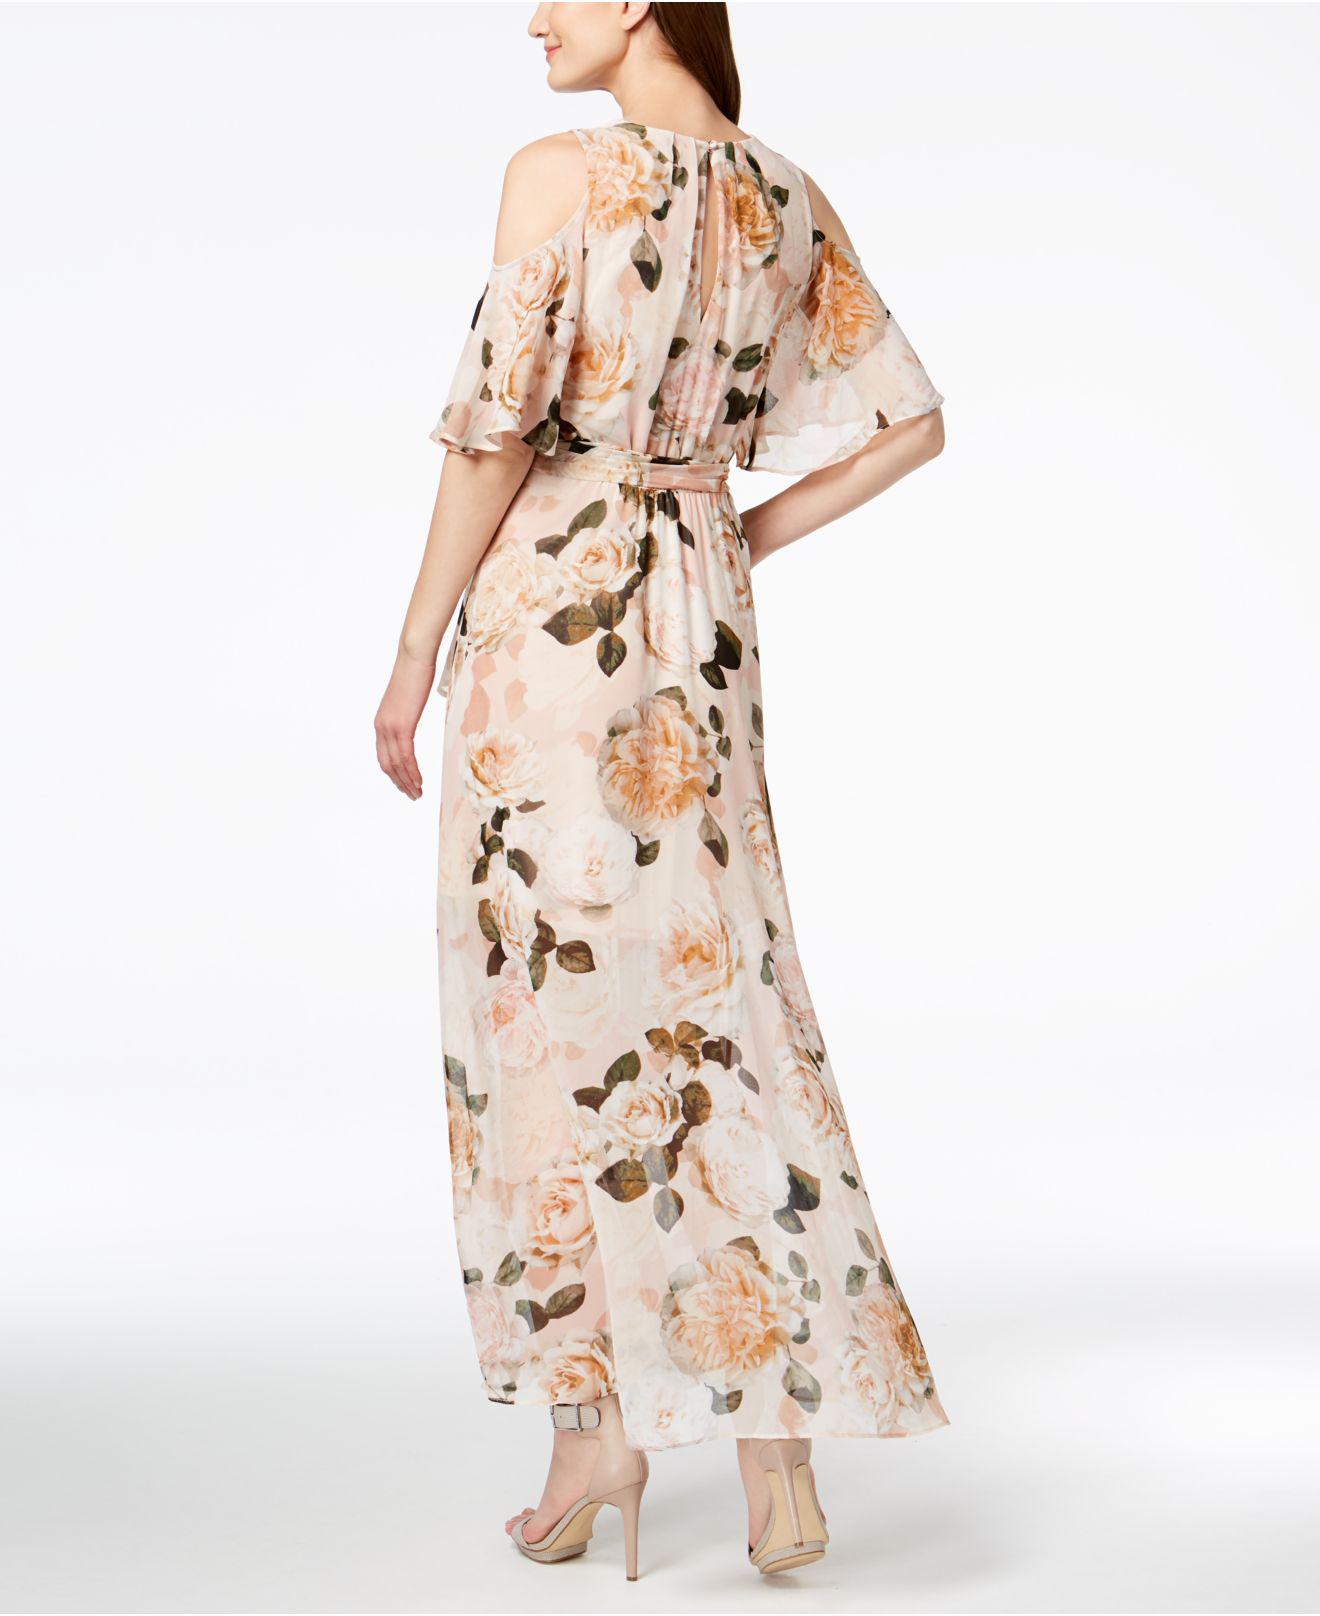 Calvin Klein Floral Chiffon Dress Online Deals, UP TO 64% OFF 